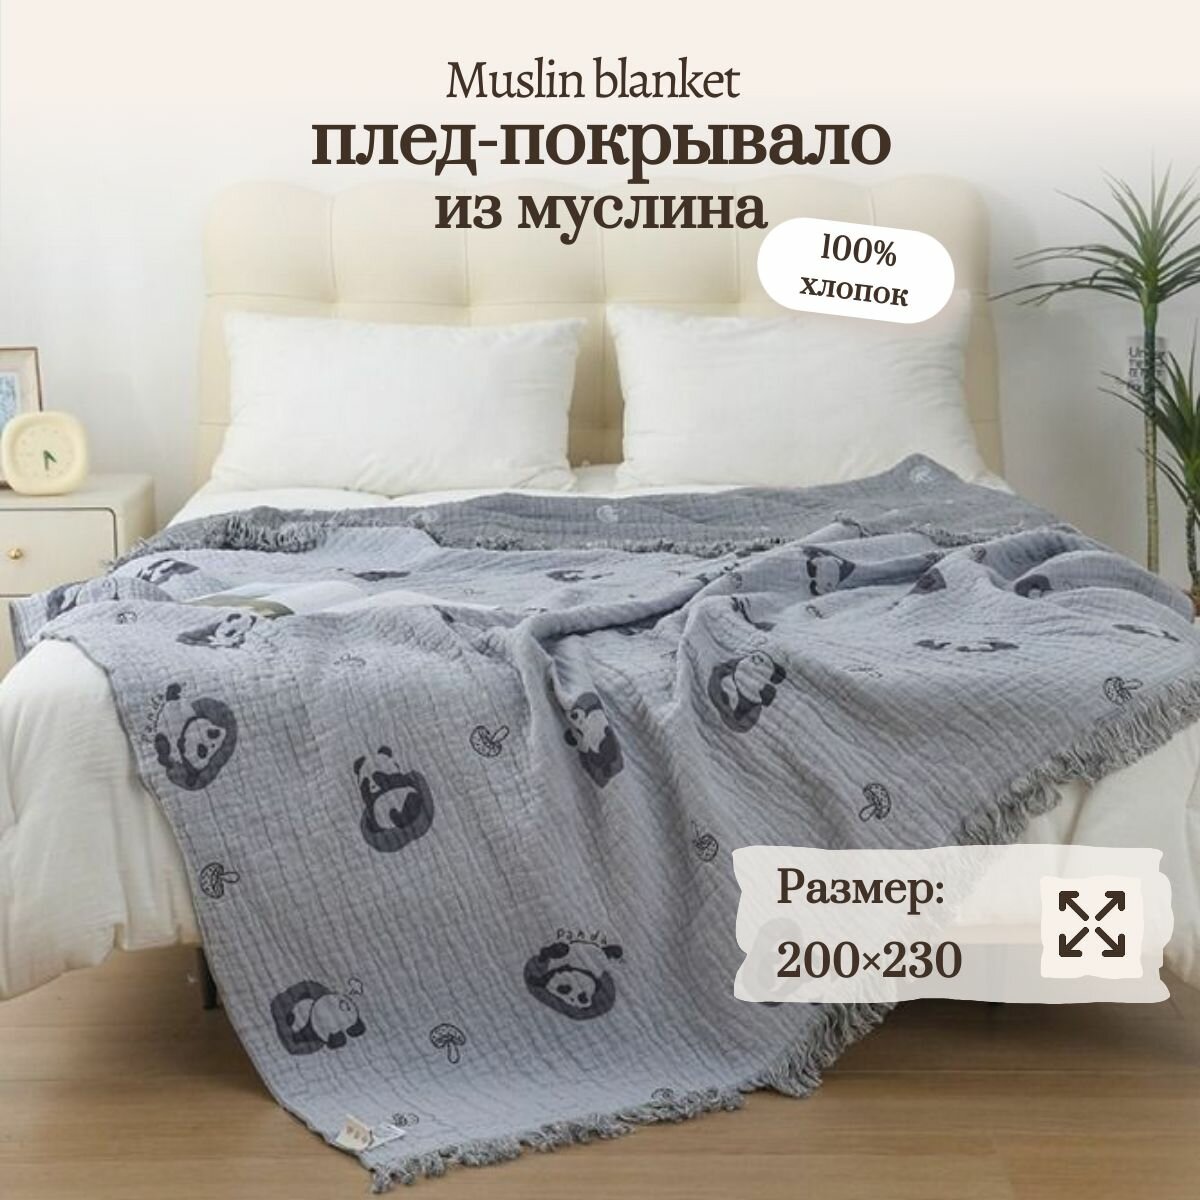 Покрывало на кровать 200х230см Muslin blanket, плед муслиновый, темно-серый панда